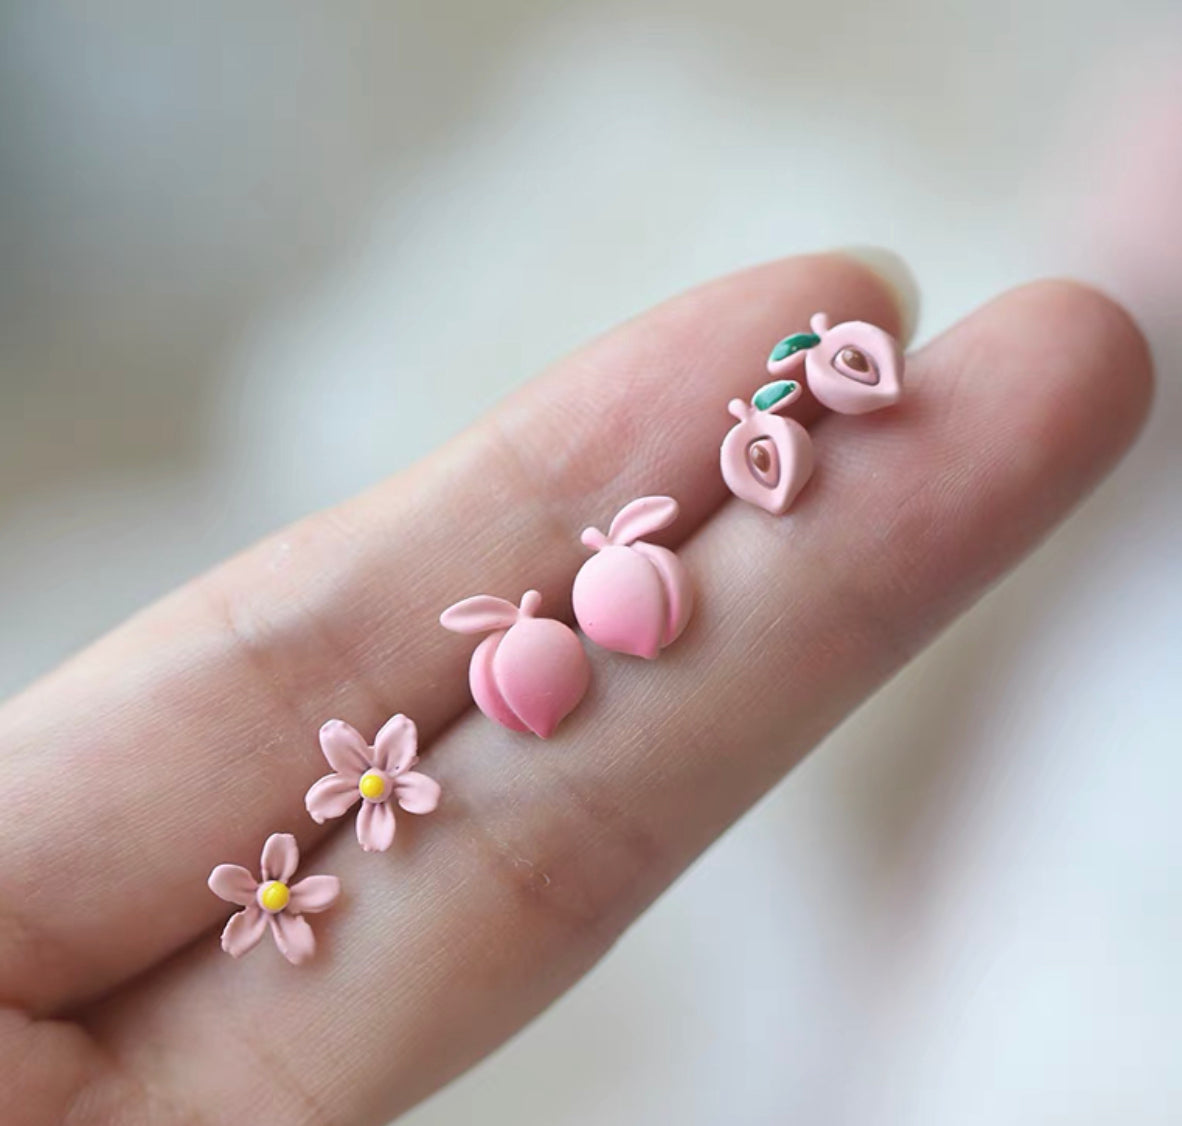 Cute Peach Earrings Set